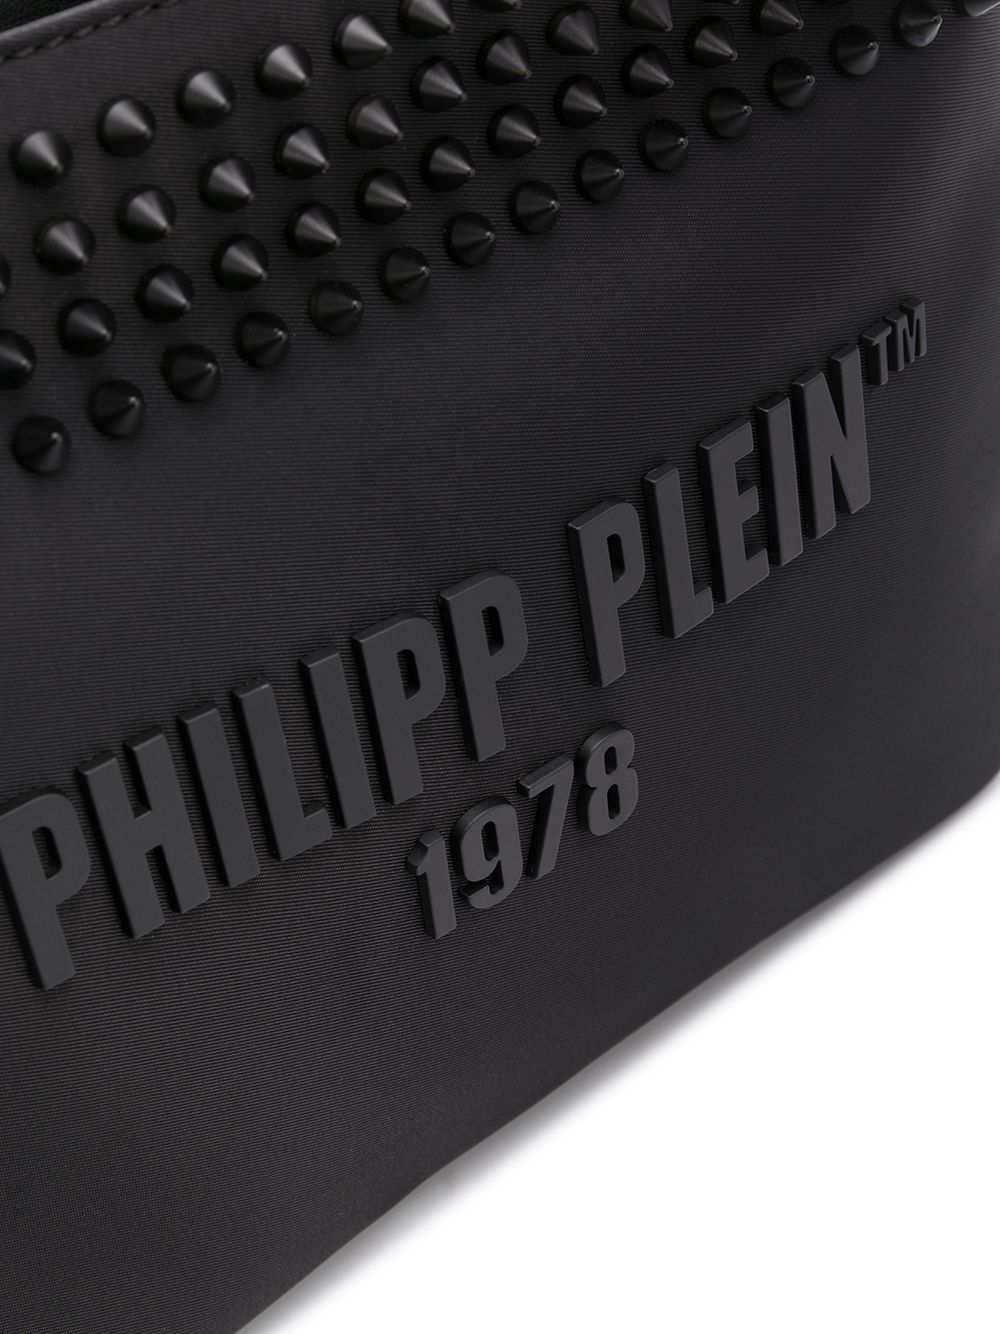 фото Philipp plein сумка на плечо с заклепками